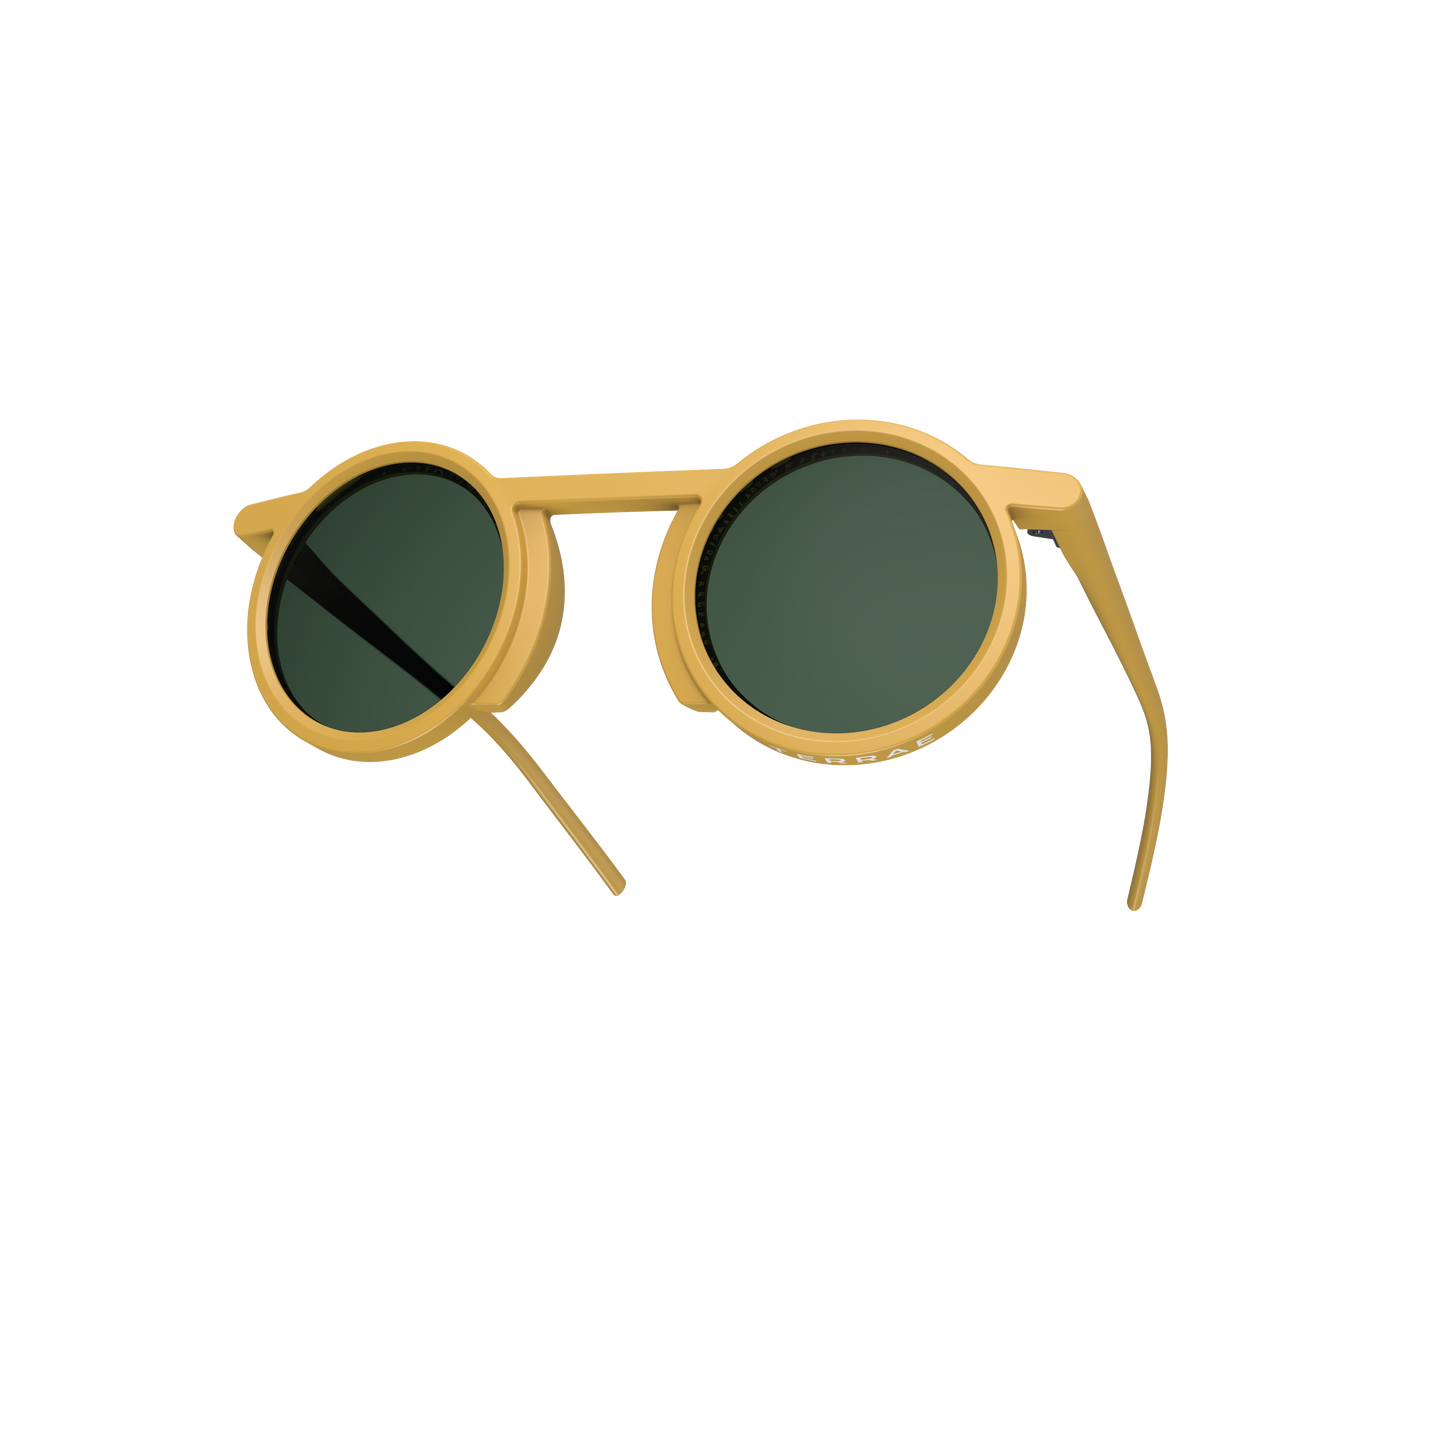 Terrae Lichi sunglasses - Mustard  beamalevich architecture gift design gift art gift